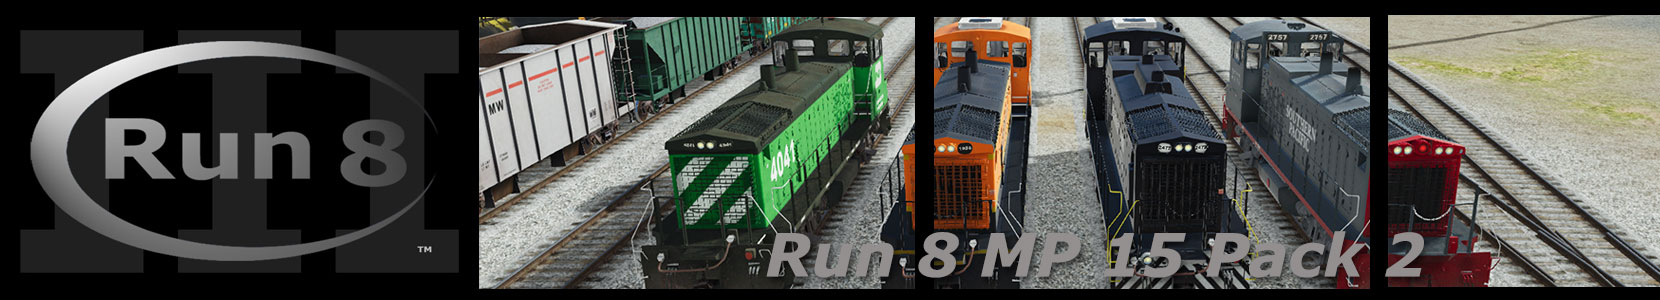 Run8 Train Simulator MP15 Pack 2